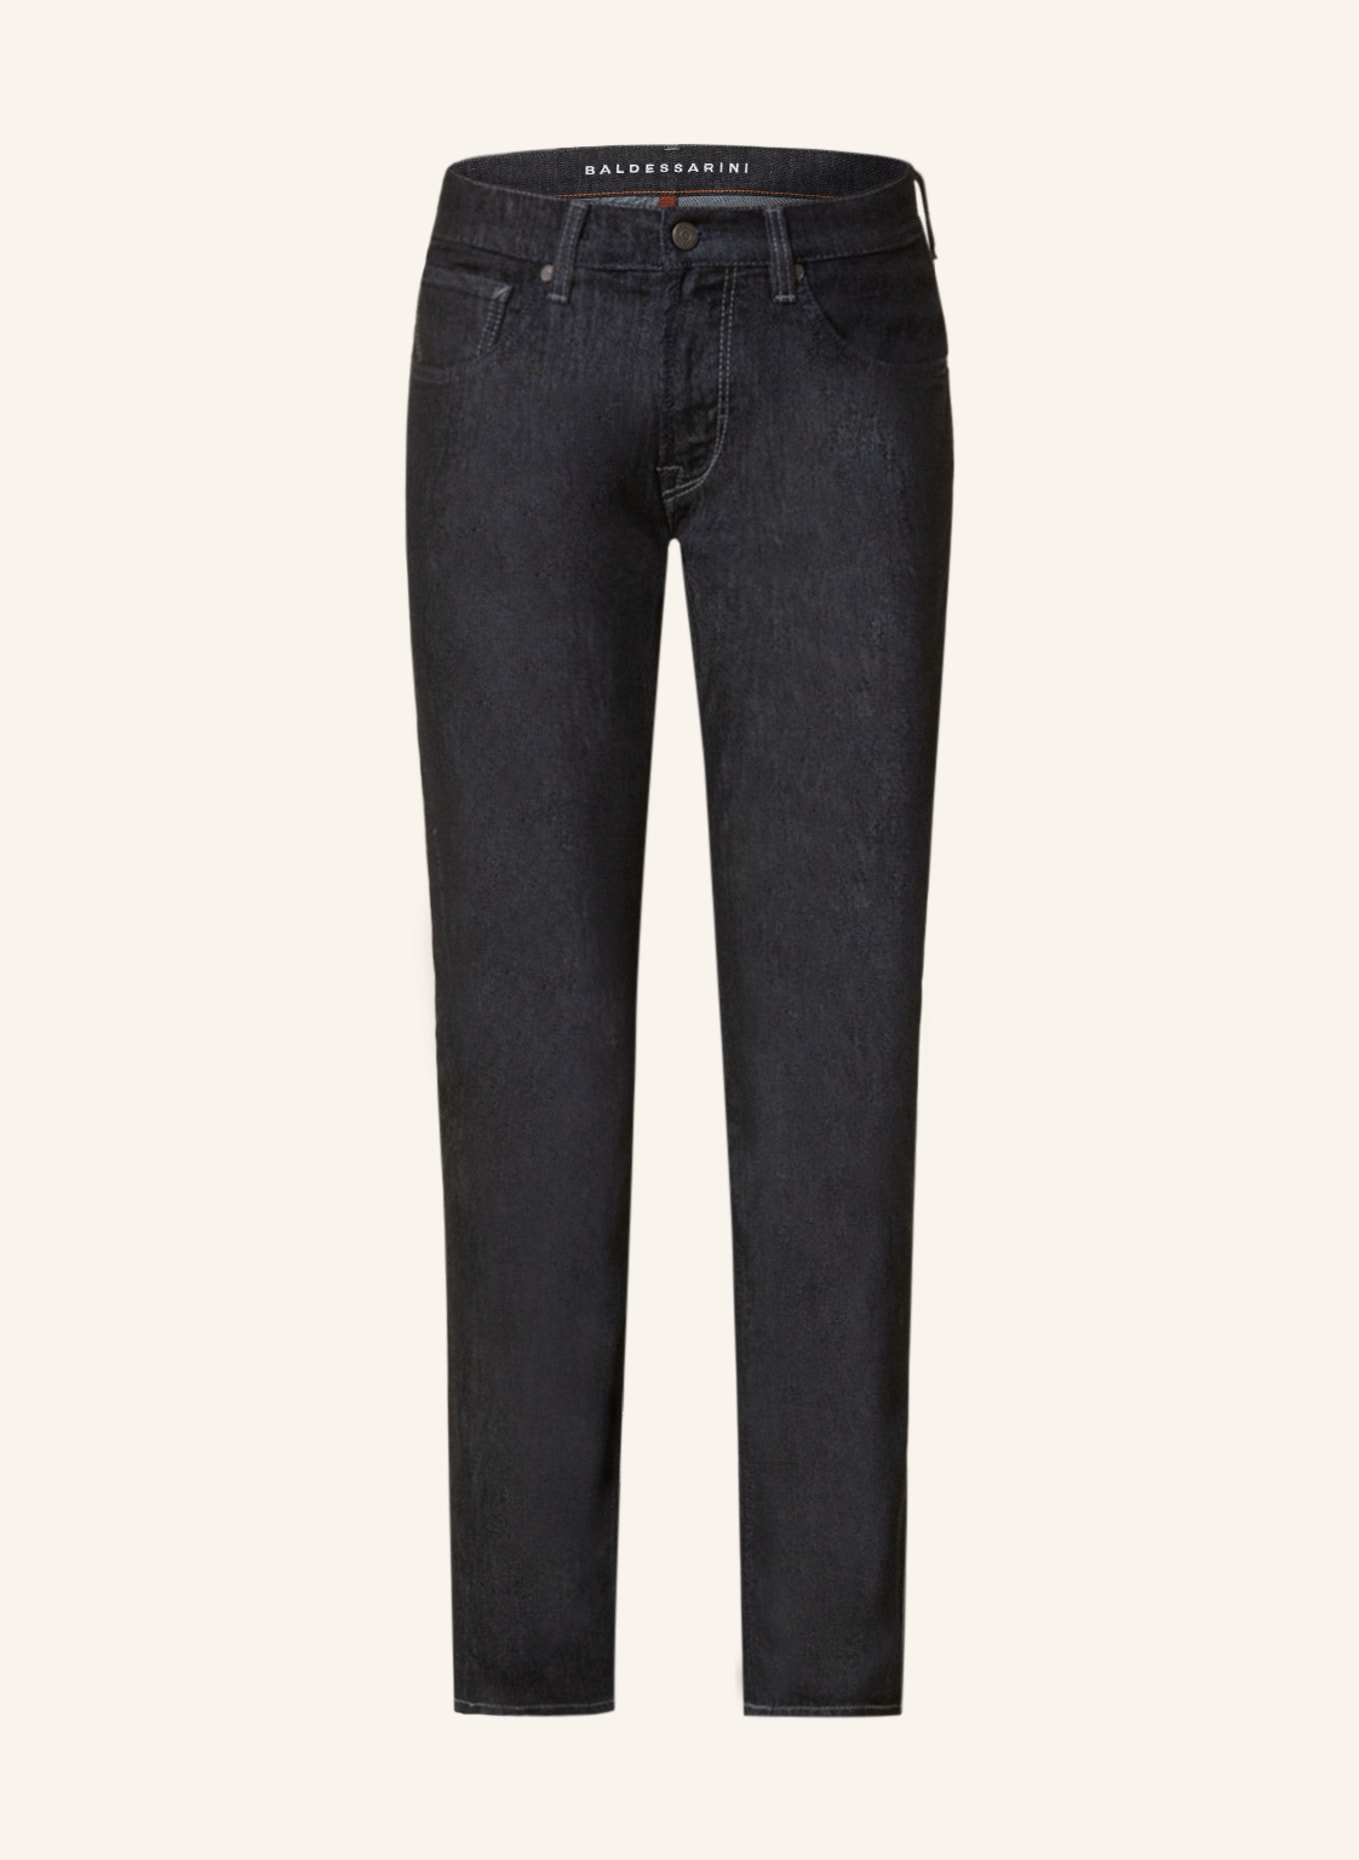 BALDESSARINI Jeans Regular Fit, Farbe: 6810 dark blue raw (Bild 1)